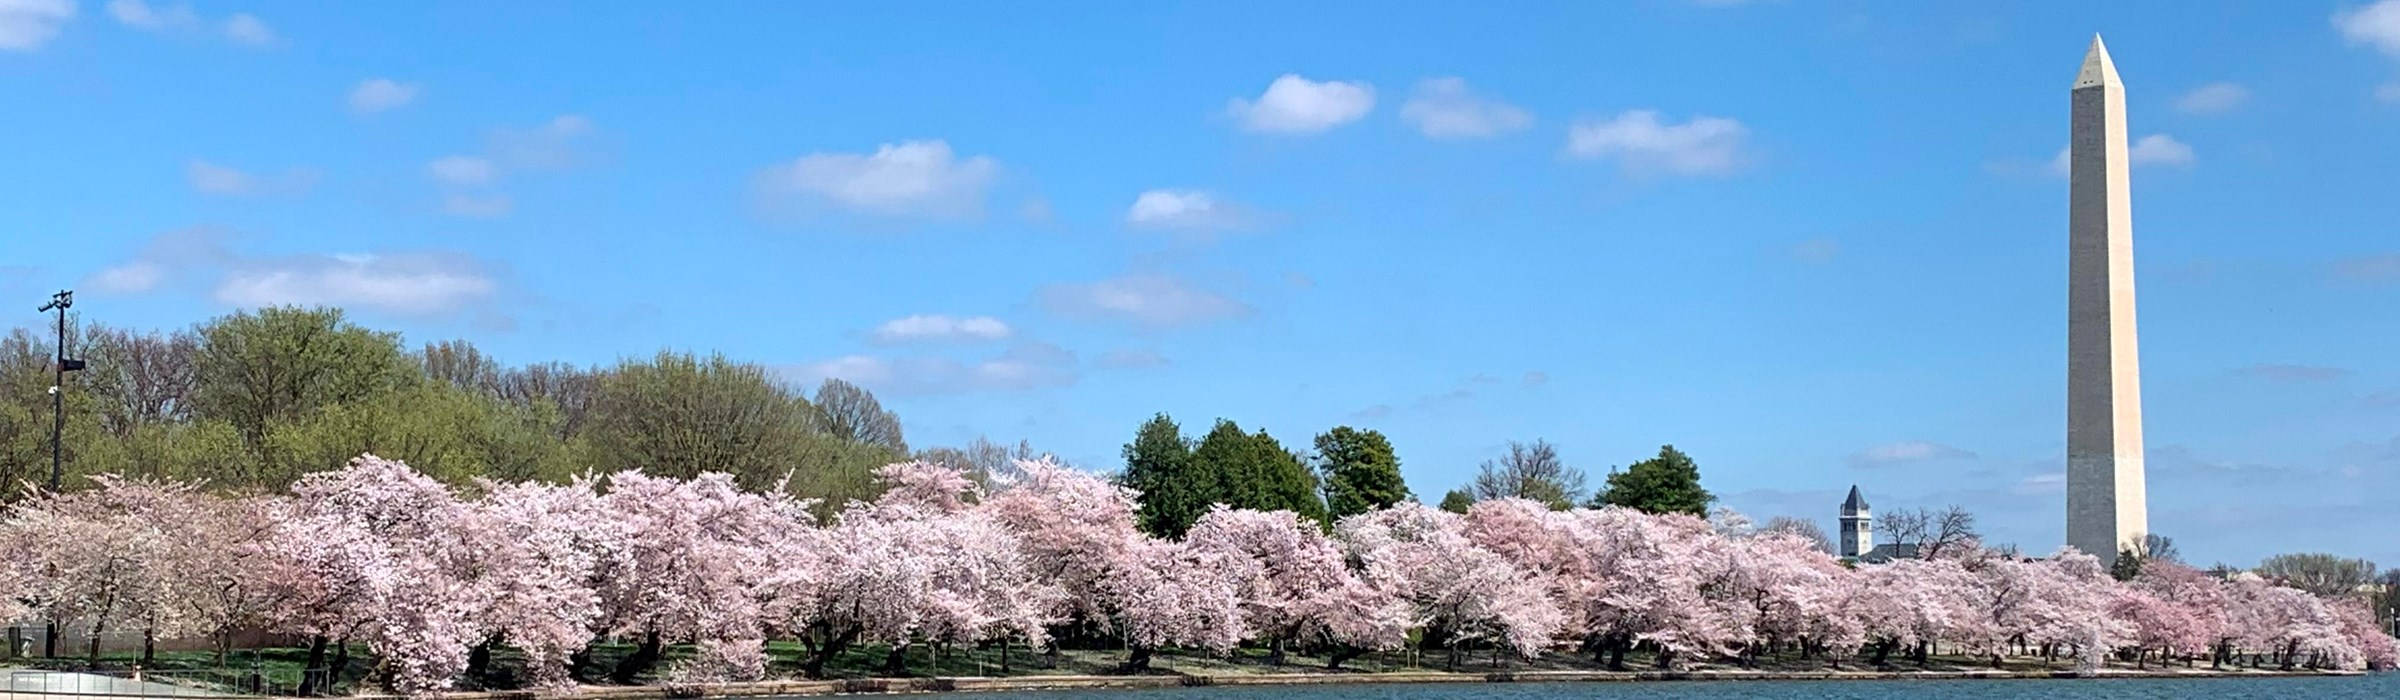 National Mall Cherry Blossom Wallpaper